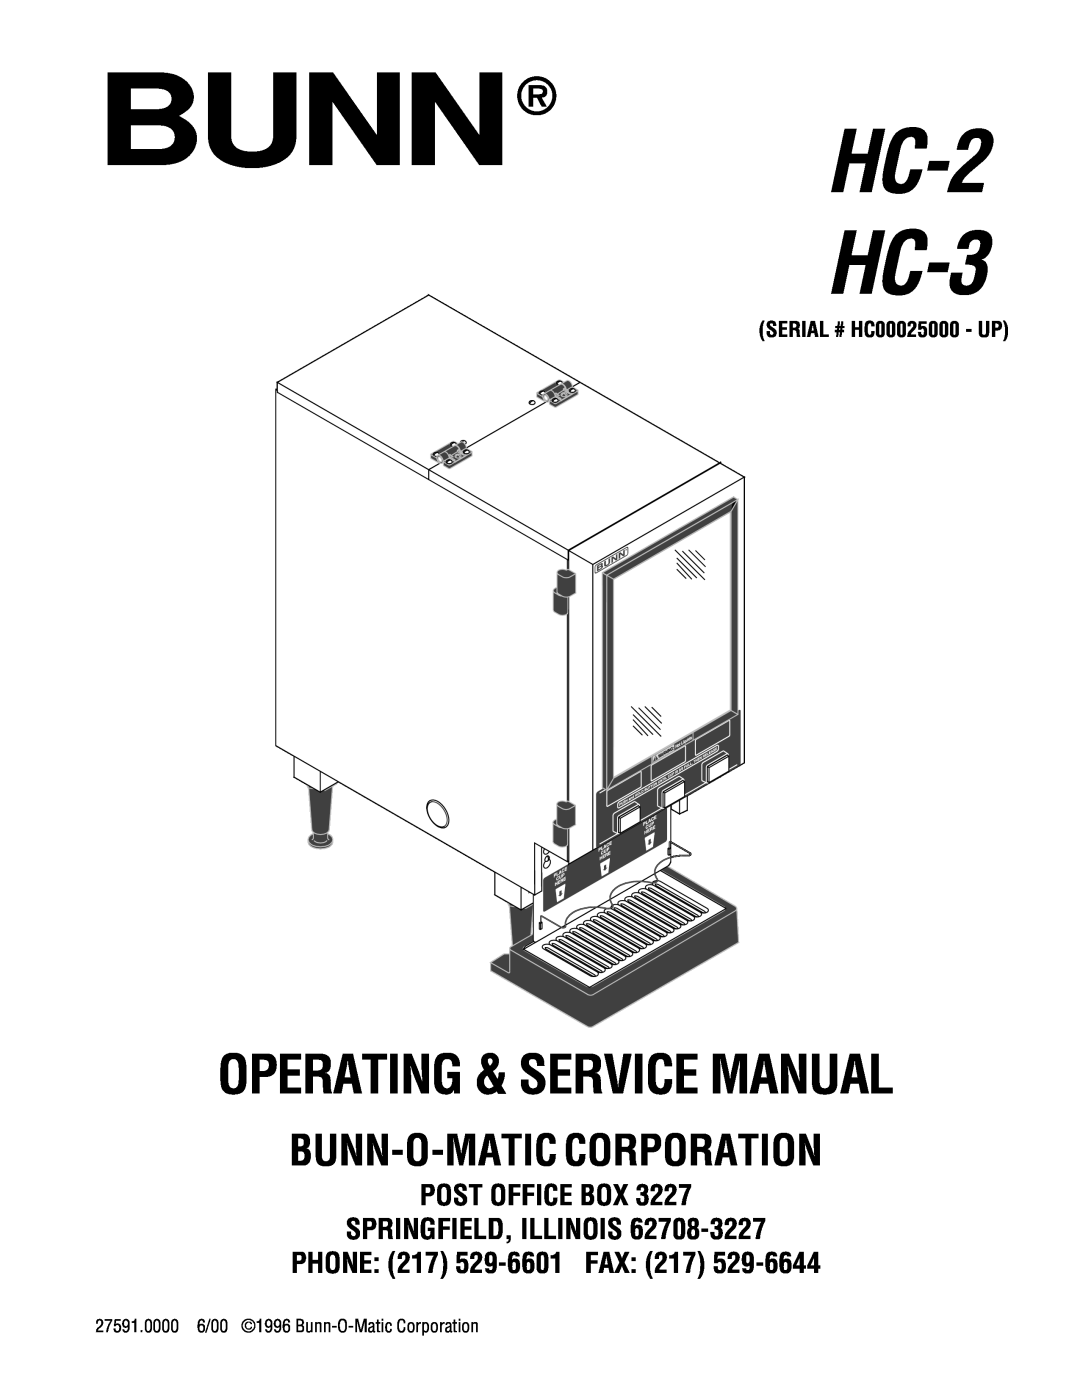 Bunn HC-2 HC-3 service manual SERIAL # HC00025000 - UP, BUNNHC-2, Bunn-O-Matic Corporation 